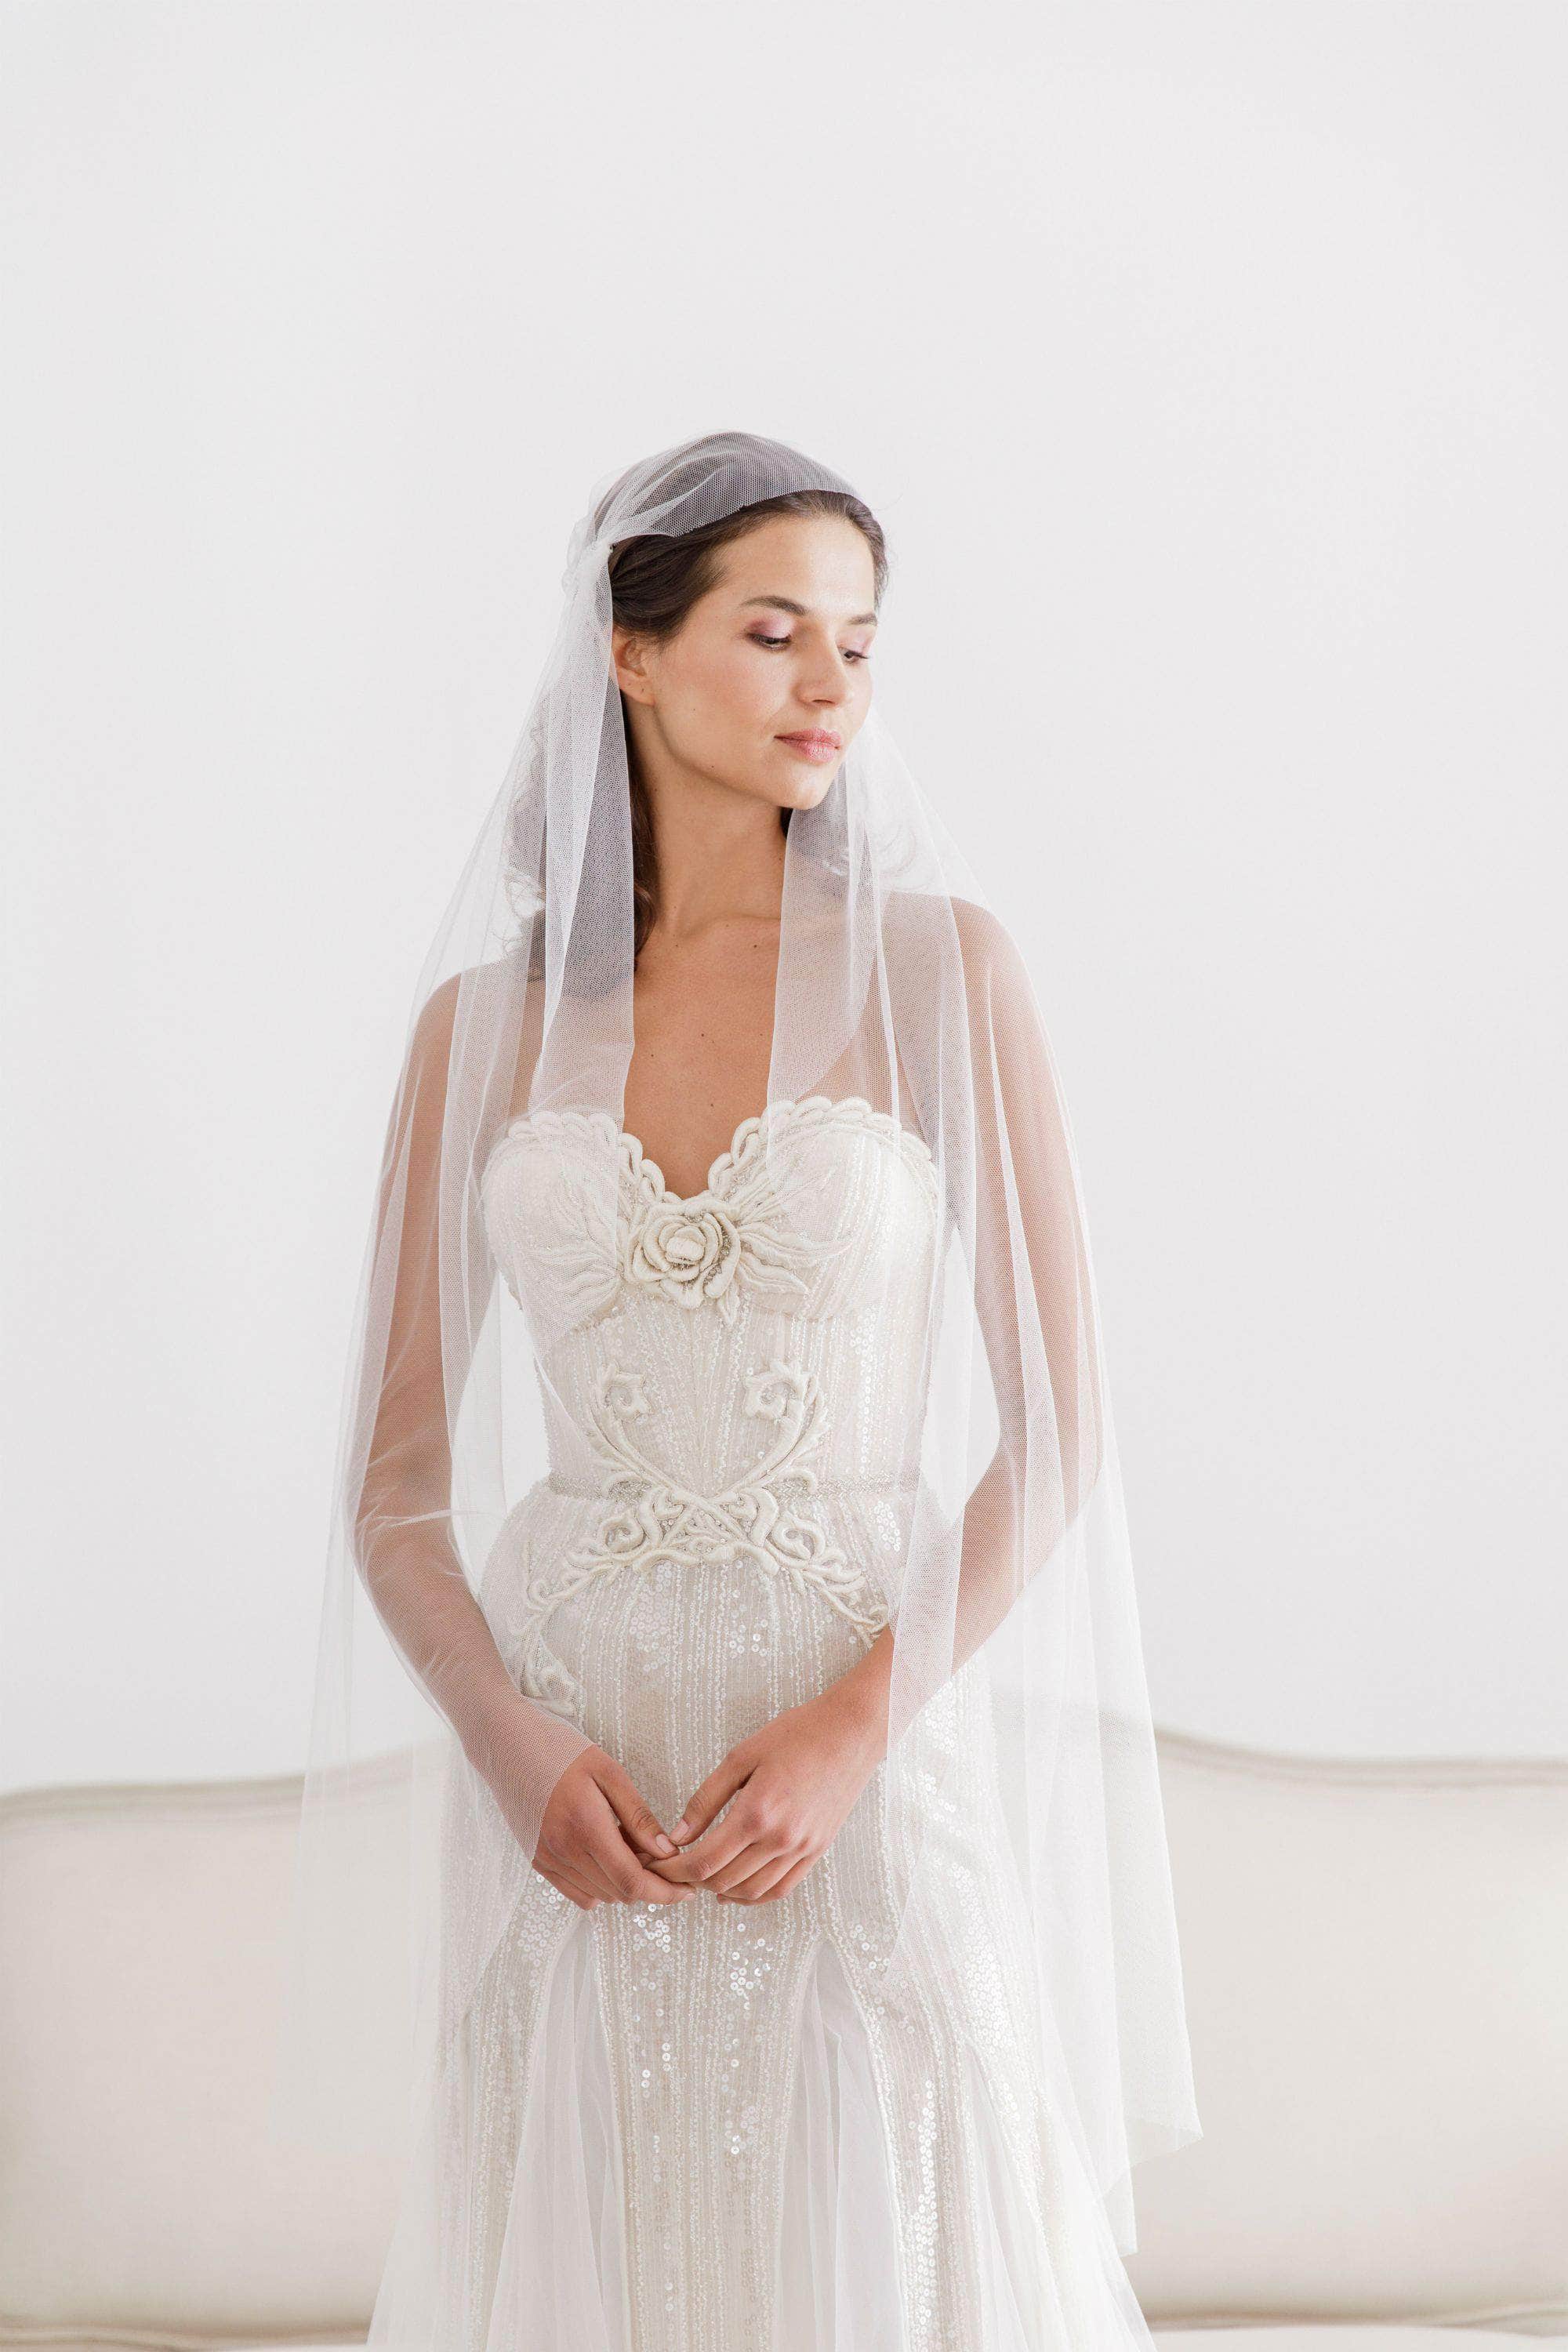 Wedding Veil white / Cathedral length White - Silk style juliet cap wedding veil - 'Dorothy'